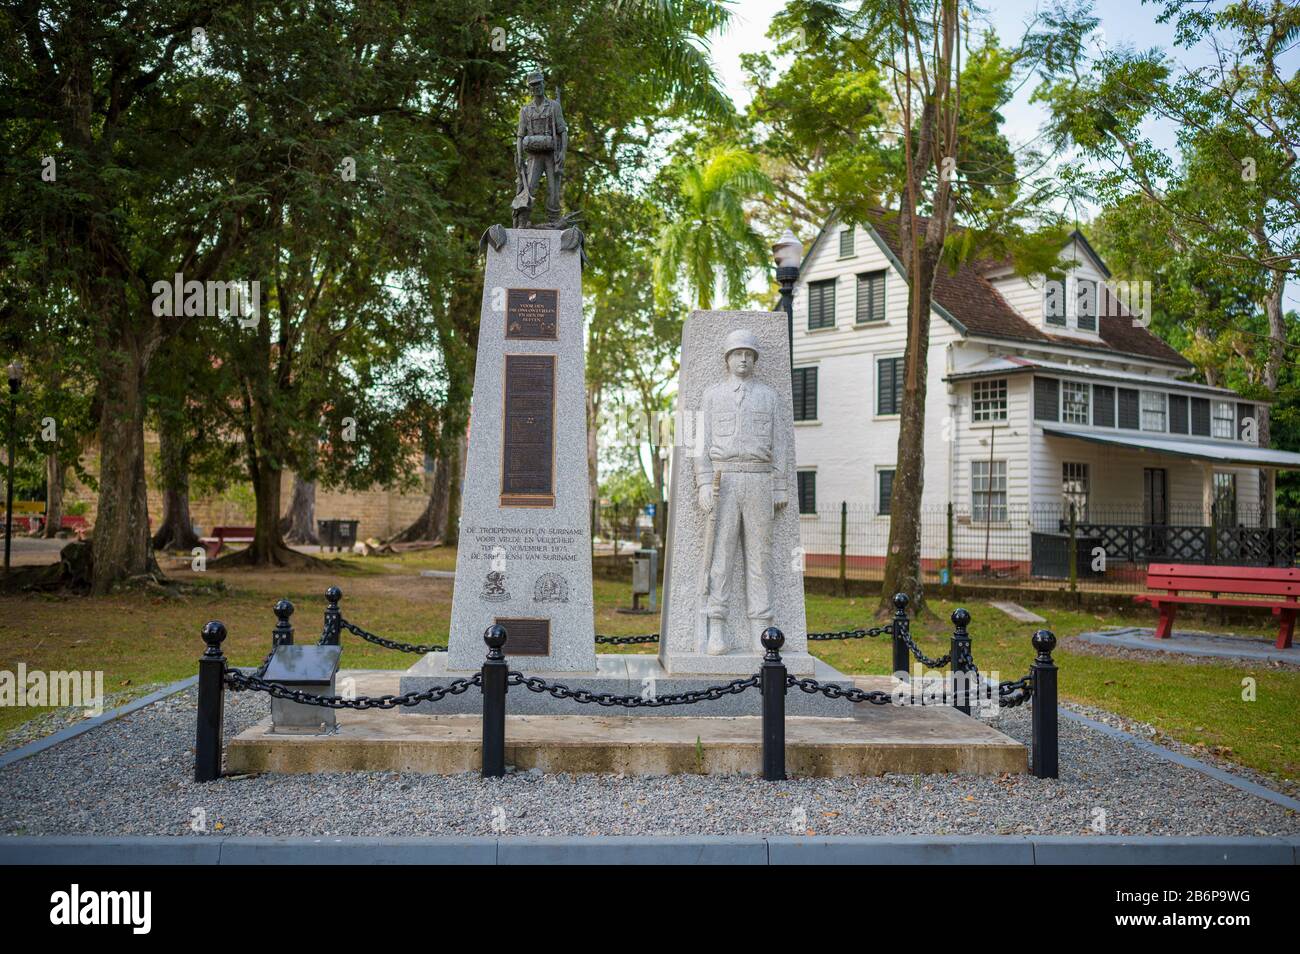 Troepenmacht in Suriname (TRIS) monument, Paramaribo close to Fort Zeelandia Stock Photo